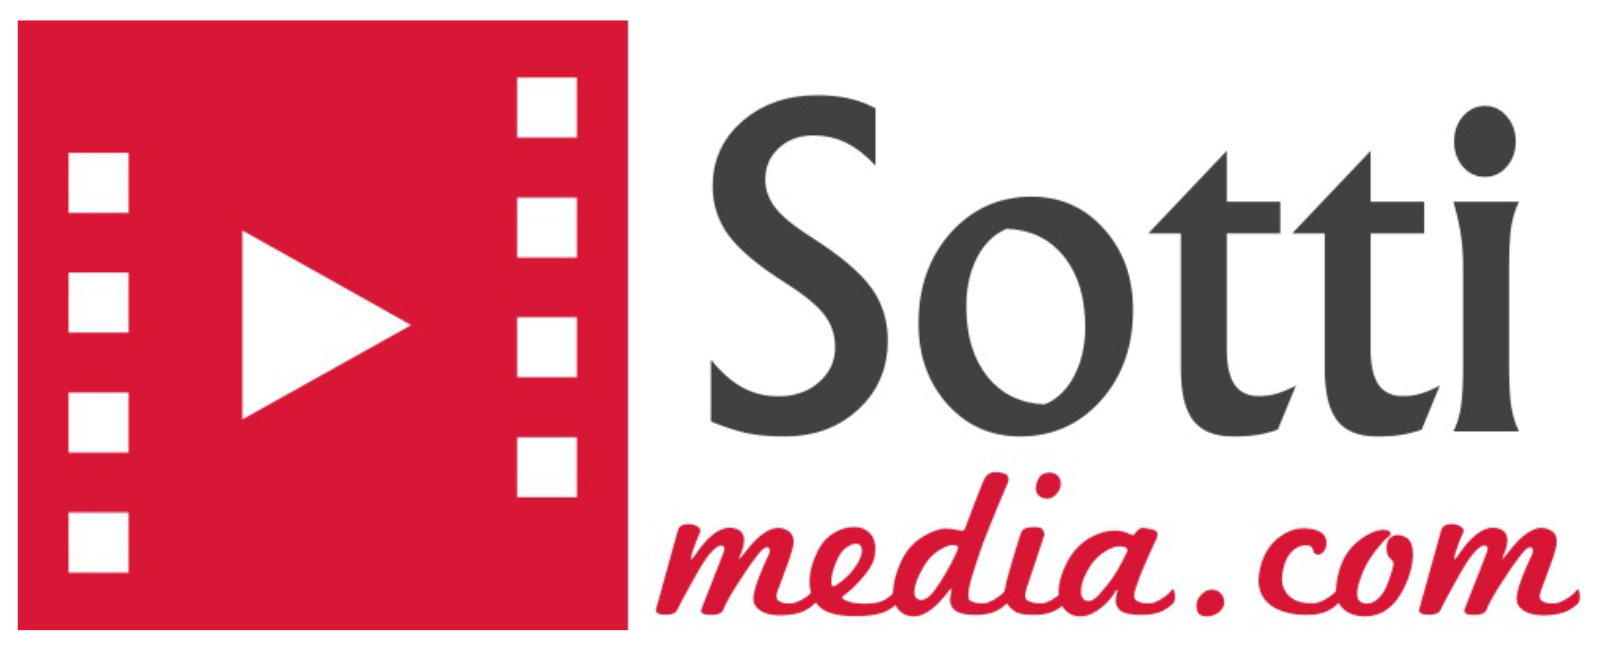 Logo_sottimedia